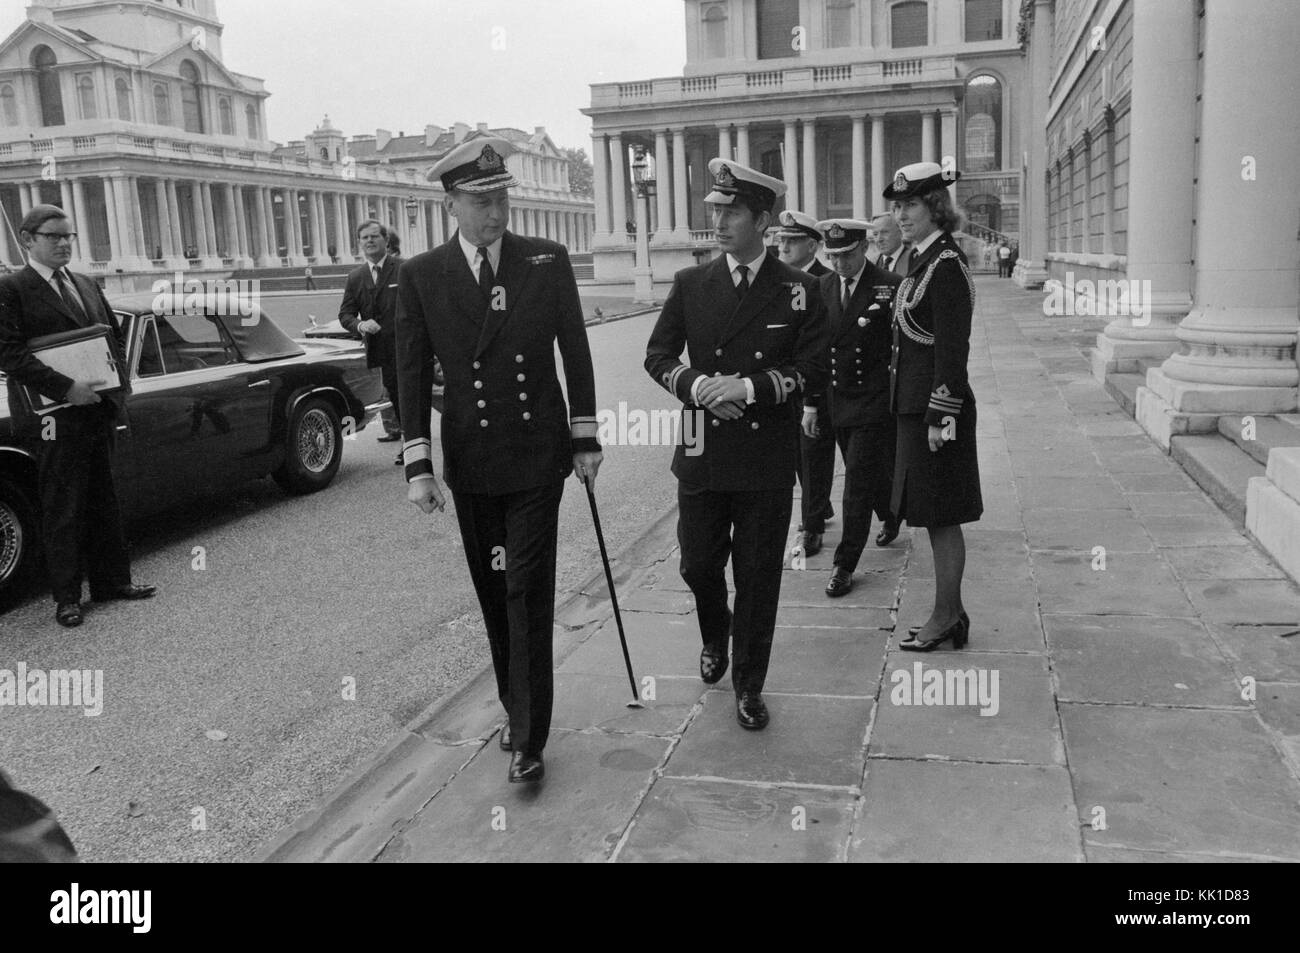 HRH Prince Charles visiting Greenwich Naval College in London in 1975. Prince Charles in his naval uniform. Stock Photo